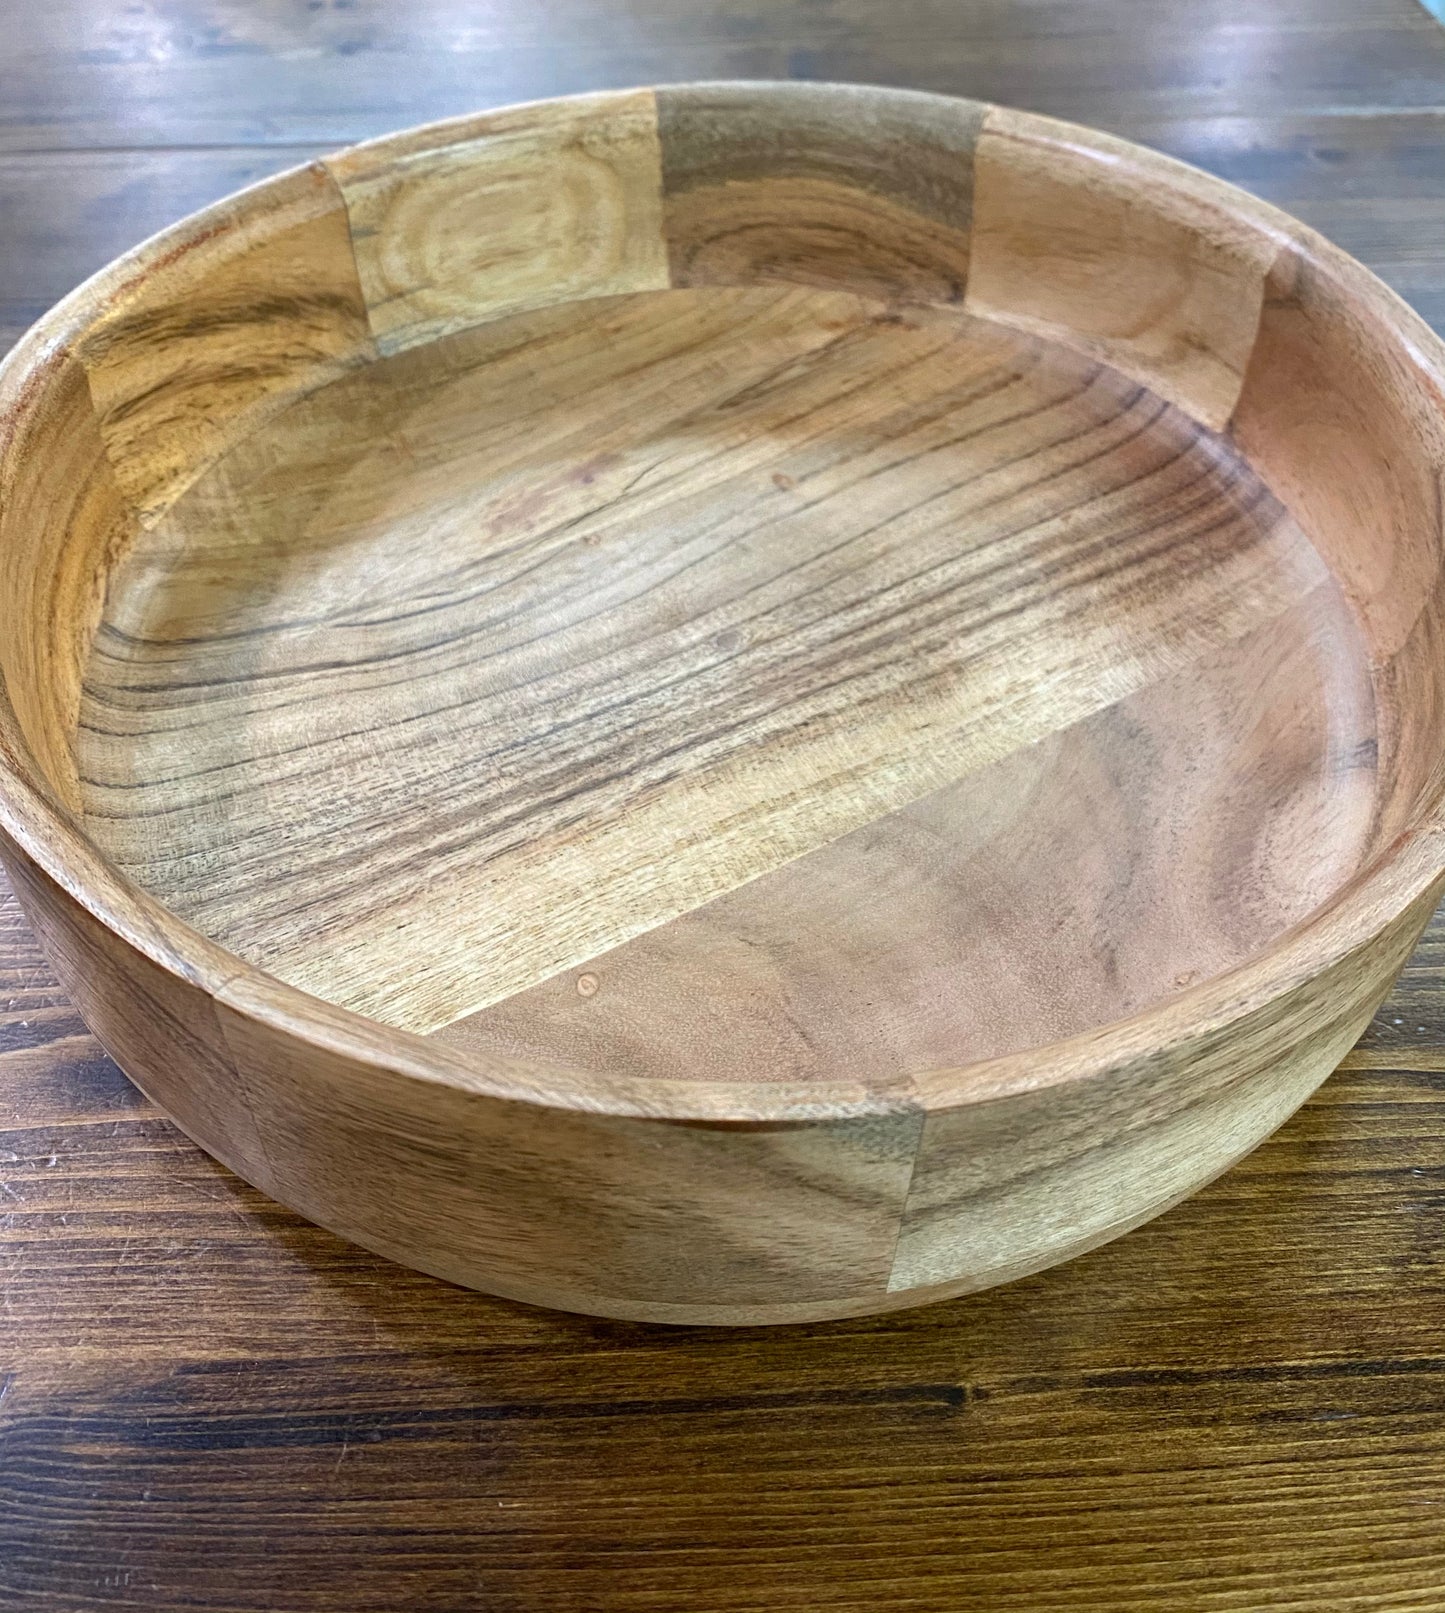 Wooden Acacia Hardwood Serving Bowl